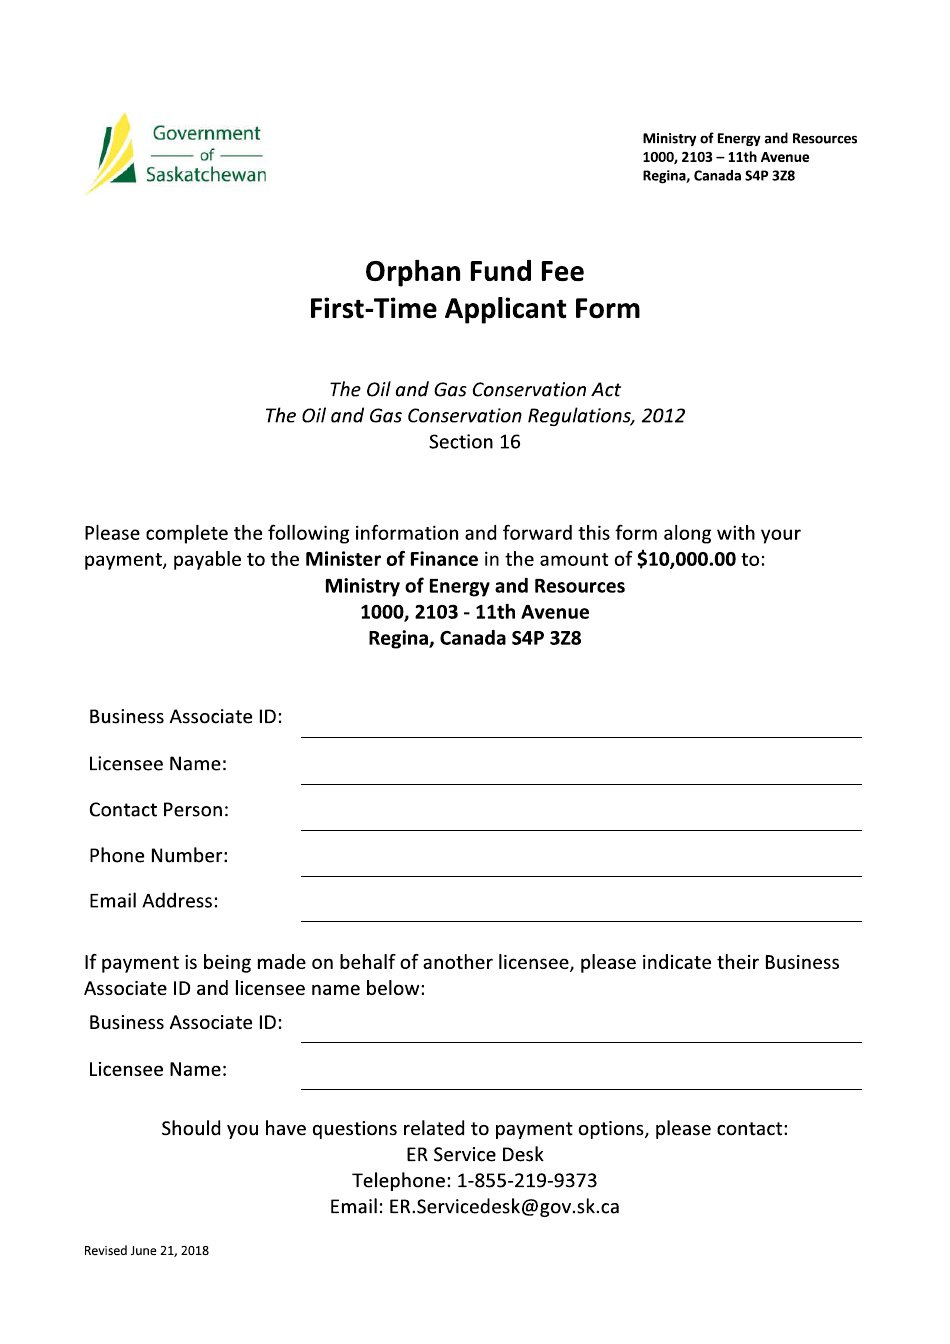 Orphan Fund Fee - First Time Applicant Form - Saskatchewan, Canada, Page 1